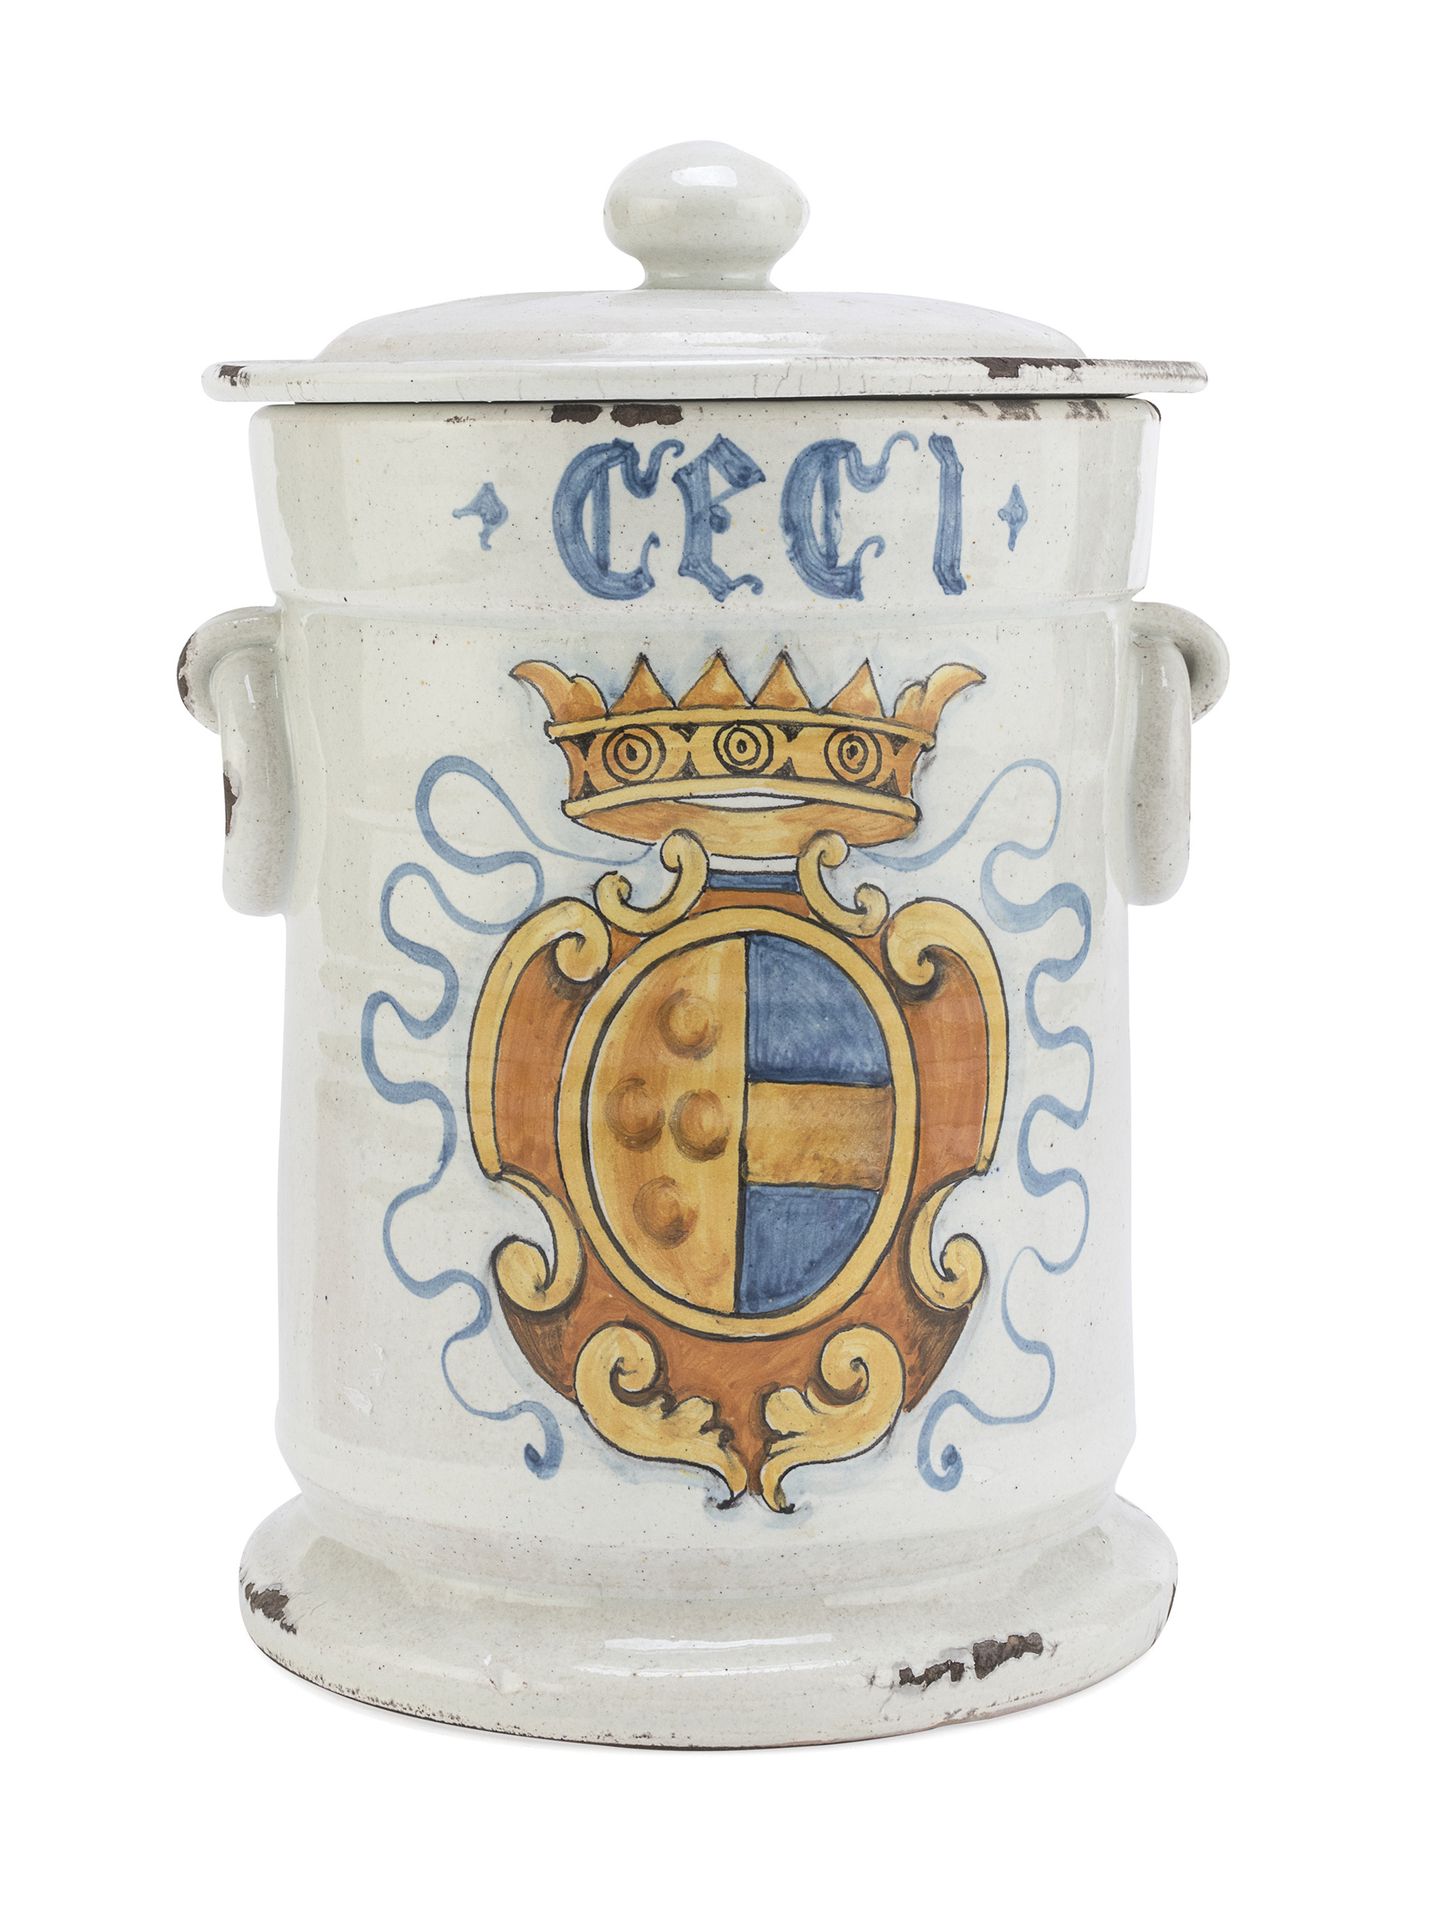 Null 金刚石药剂罐，20世纪

白珐琅，有家族徽章的多色装饰。

尺寸为25 x 18厘米。